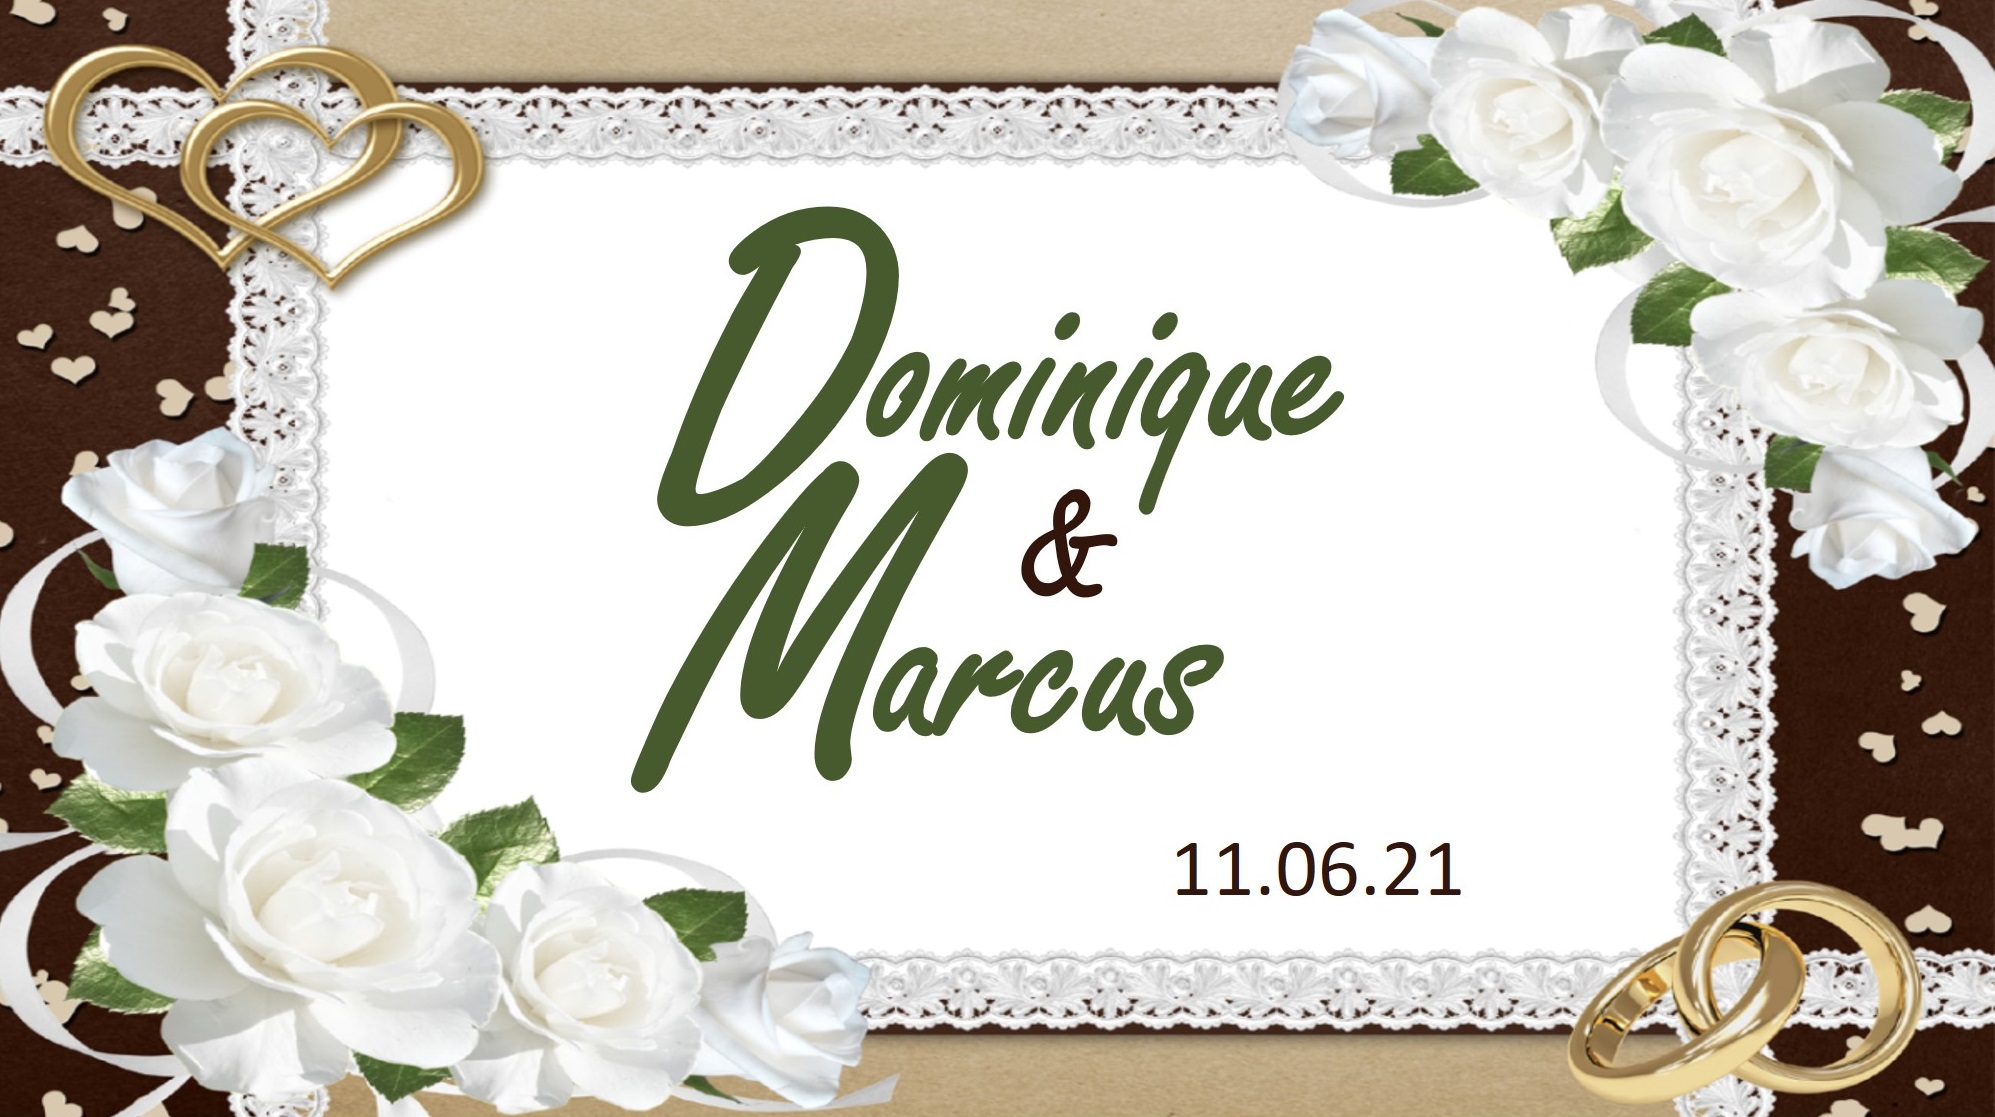 Marcus and Dominique Wedding